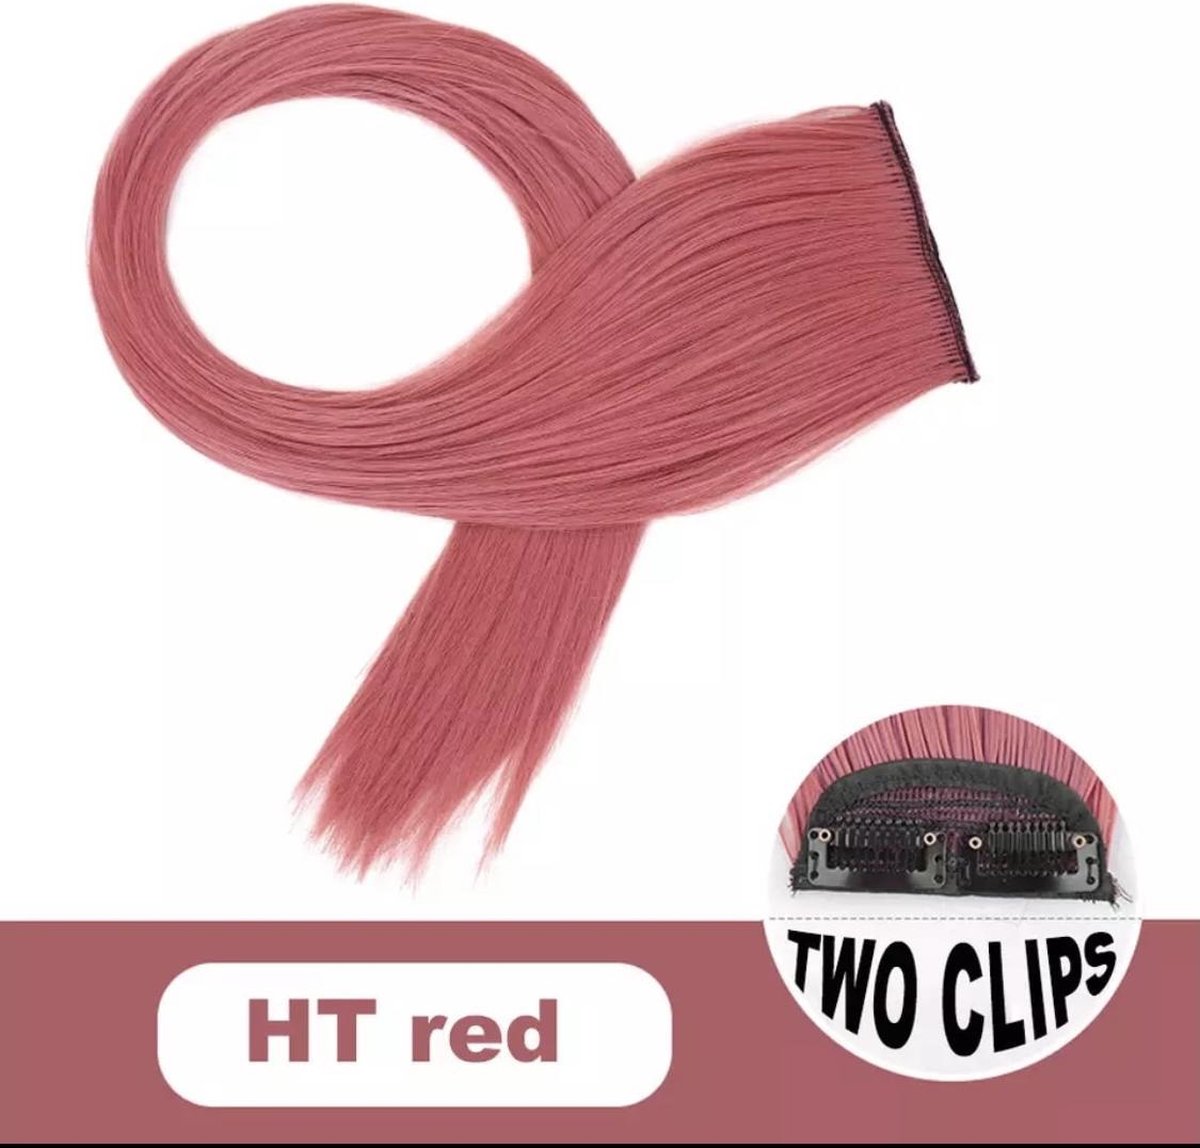 Clip in Extension 2 clips - zalm roze Clip in Extension - Nep haar clip in- duo clip in extension -